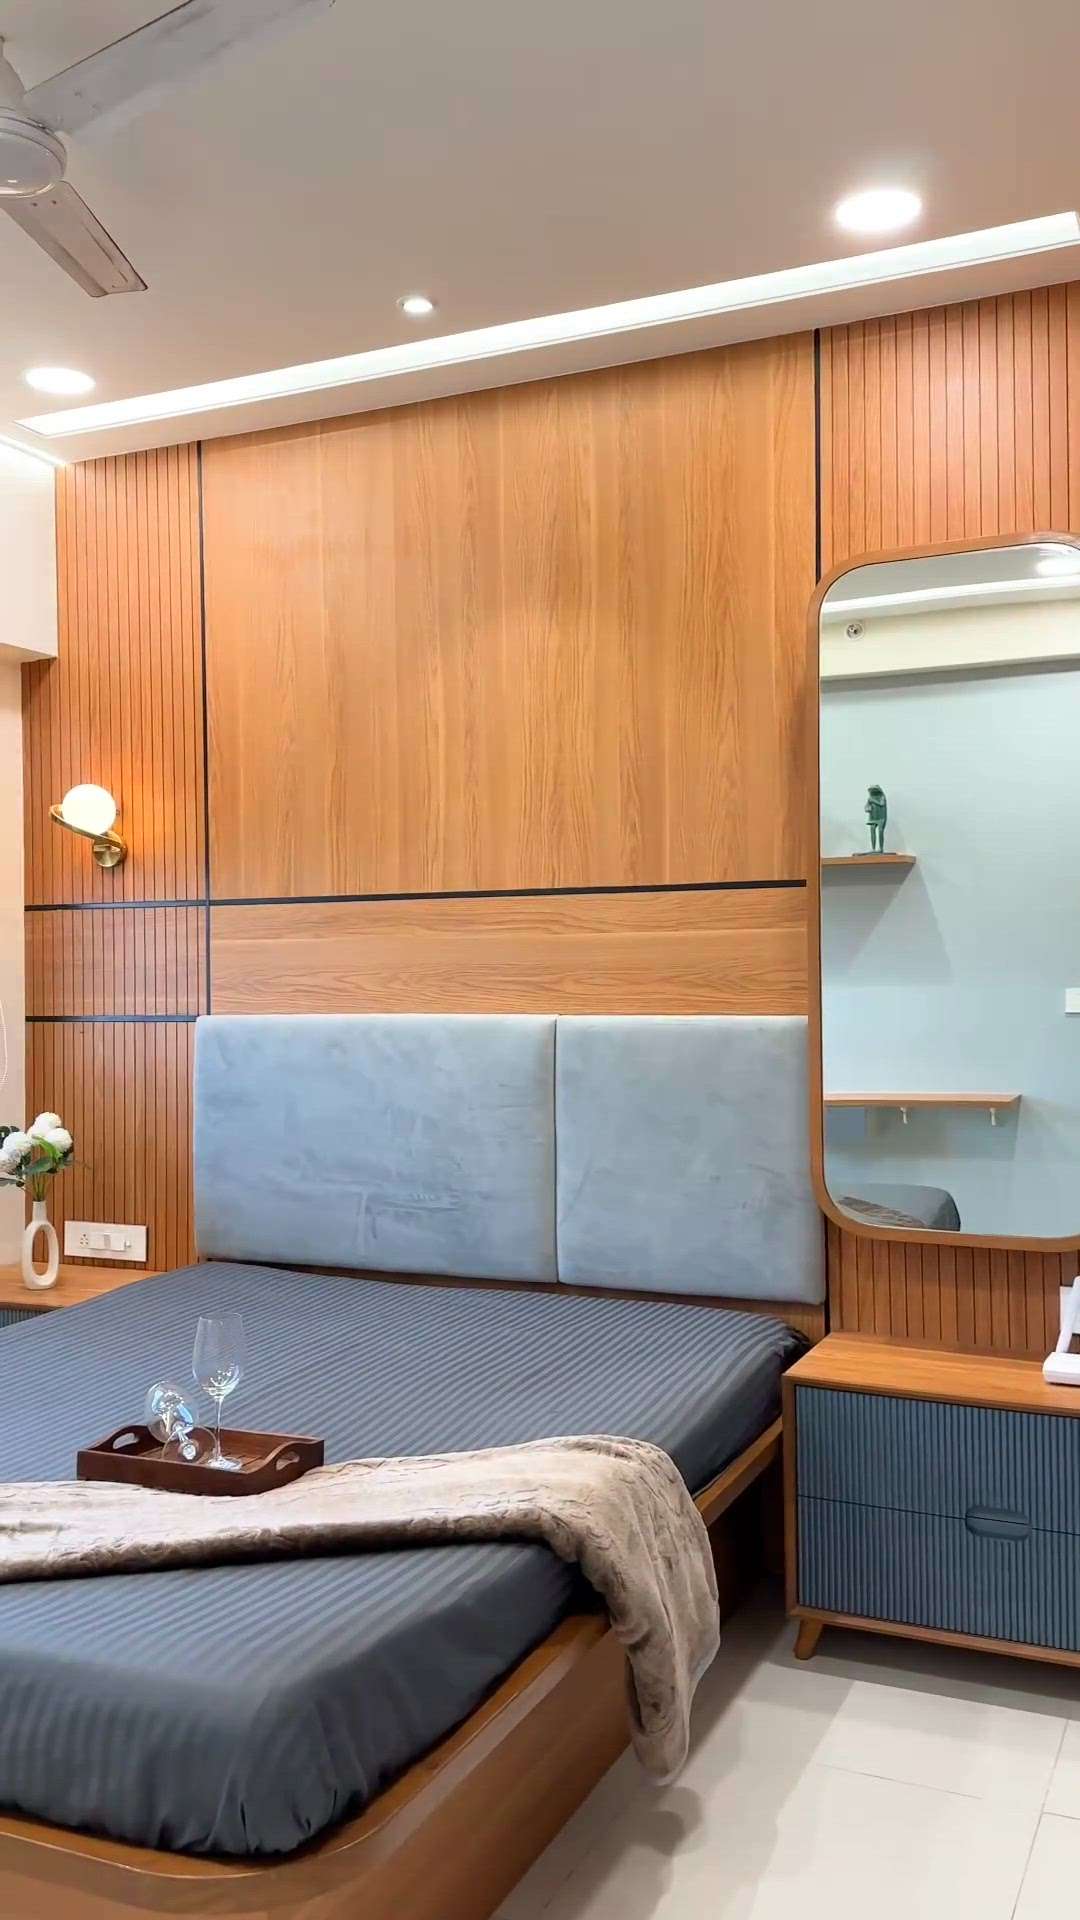 #InteriorDesigner #MasterBedroom #Beds #ModularKitchen #modularwardrobe #Sofas